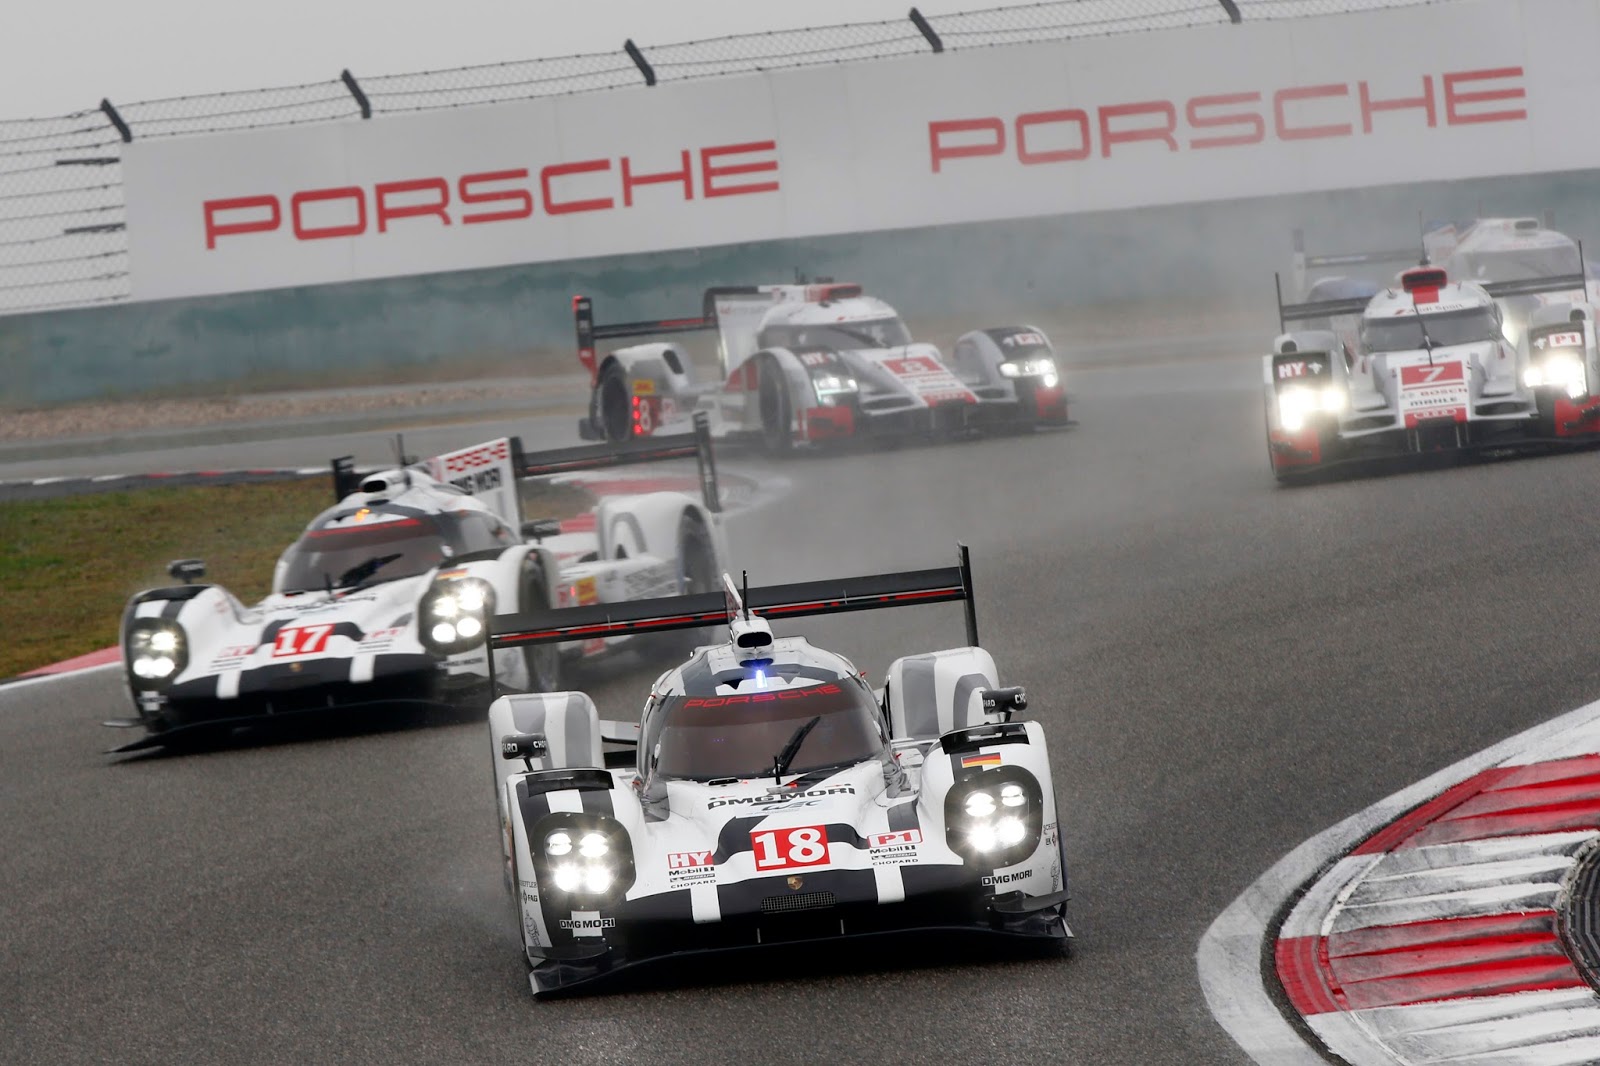 005+-+Porsche+leading+the+race.jpg